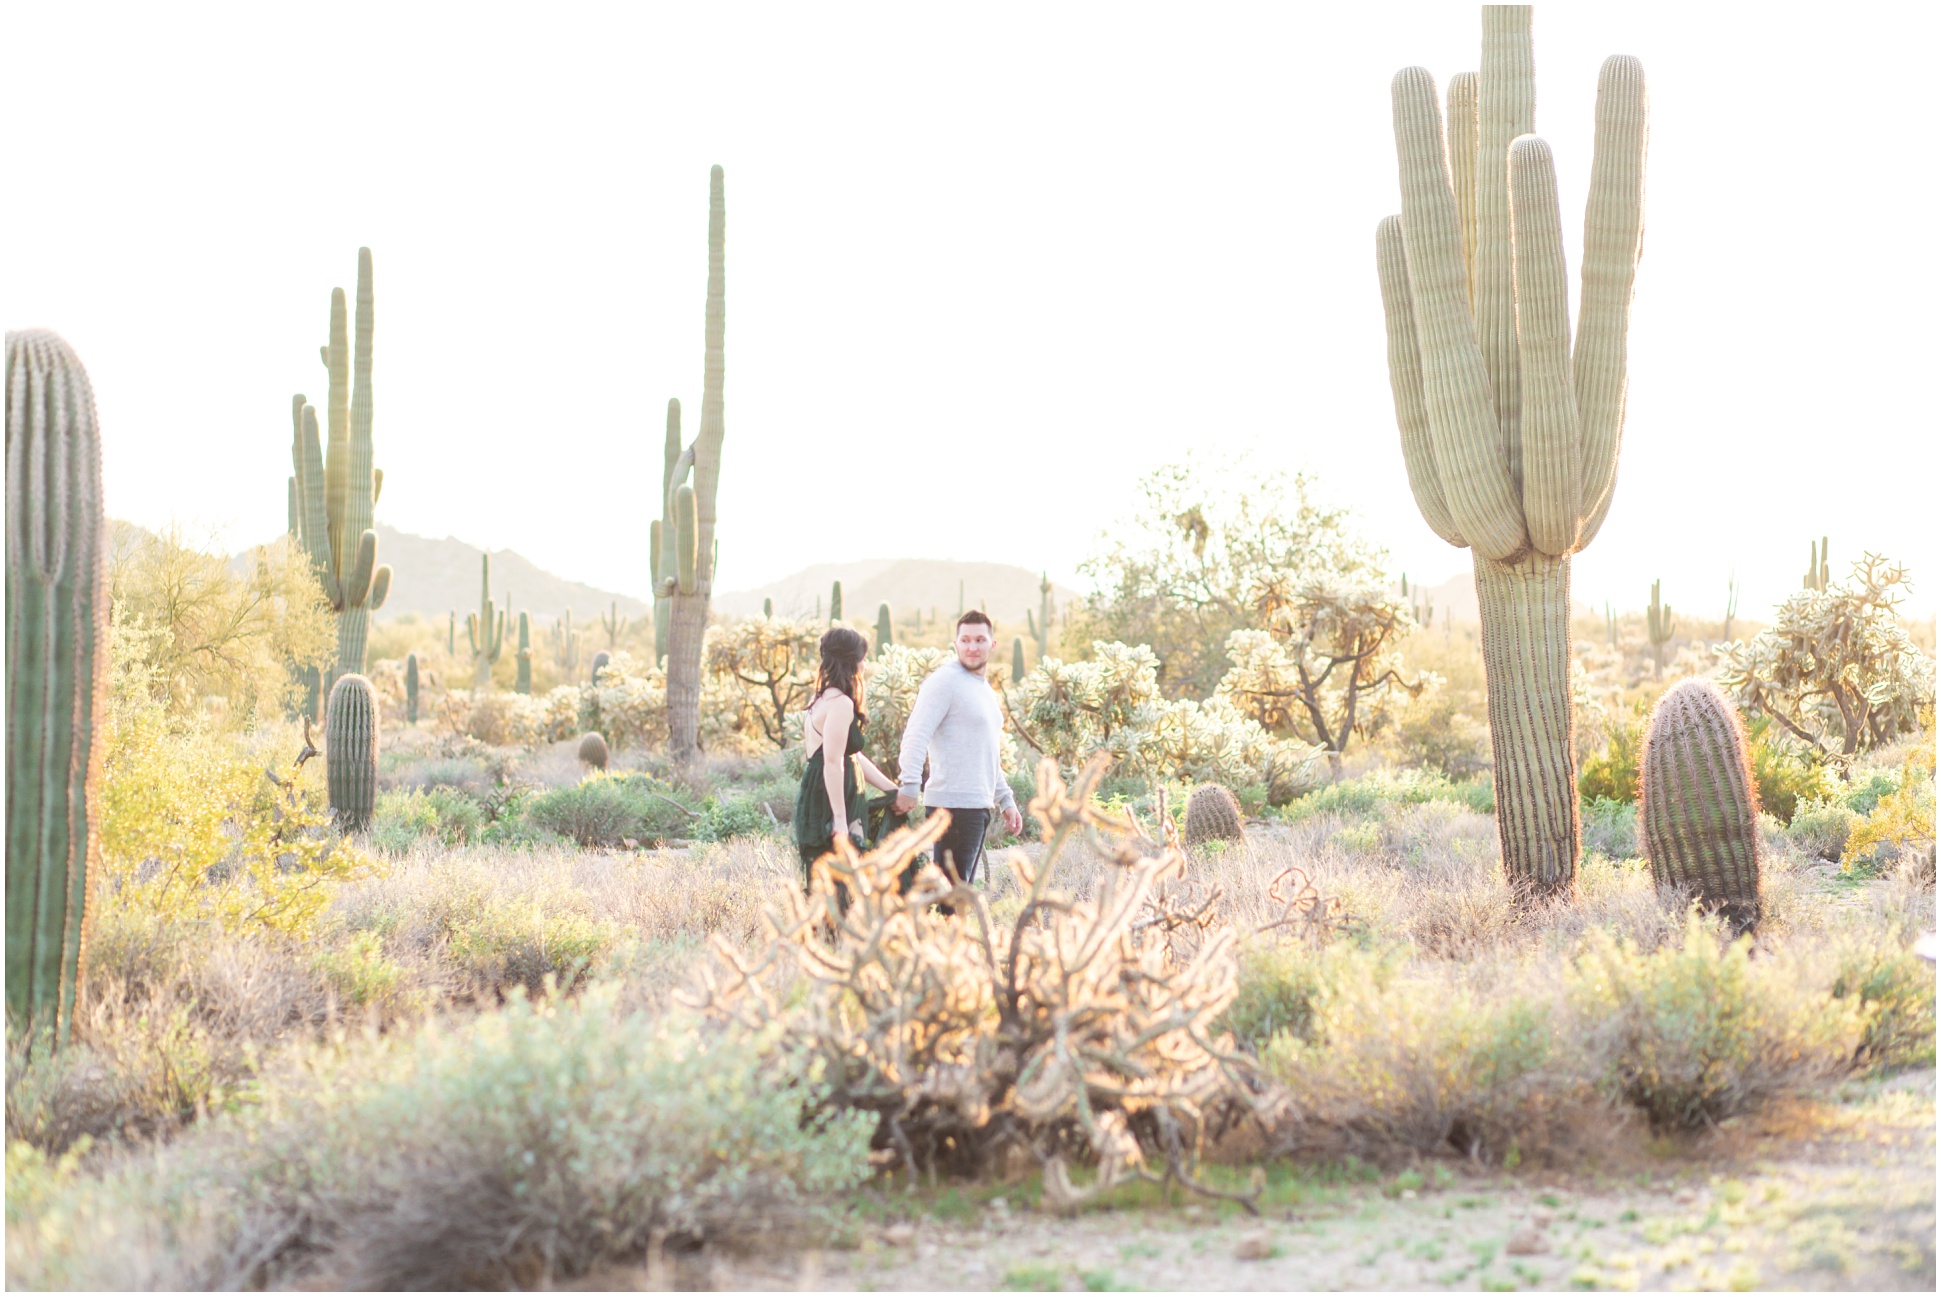 Kaila and Jake walking past saguaro